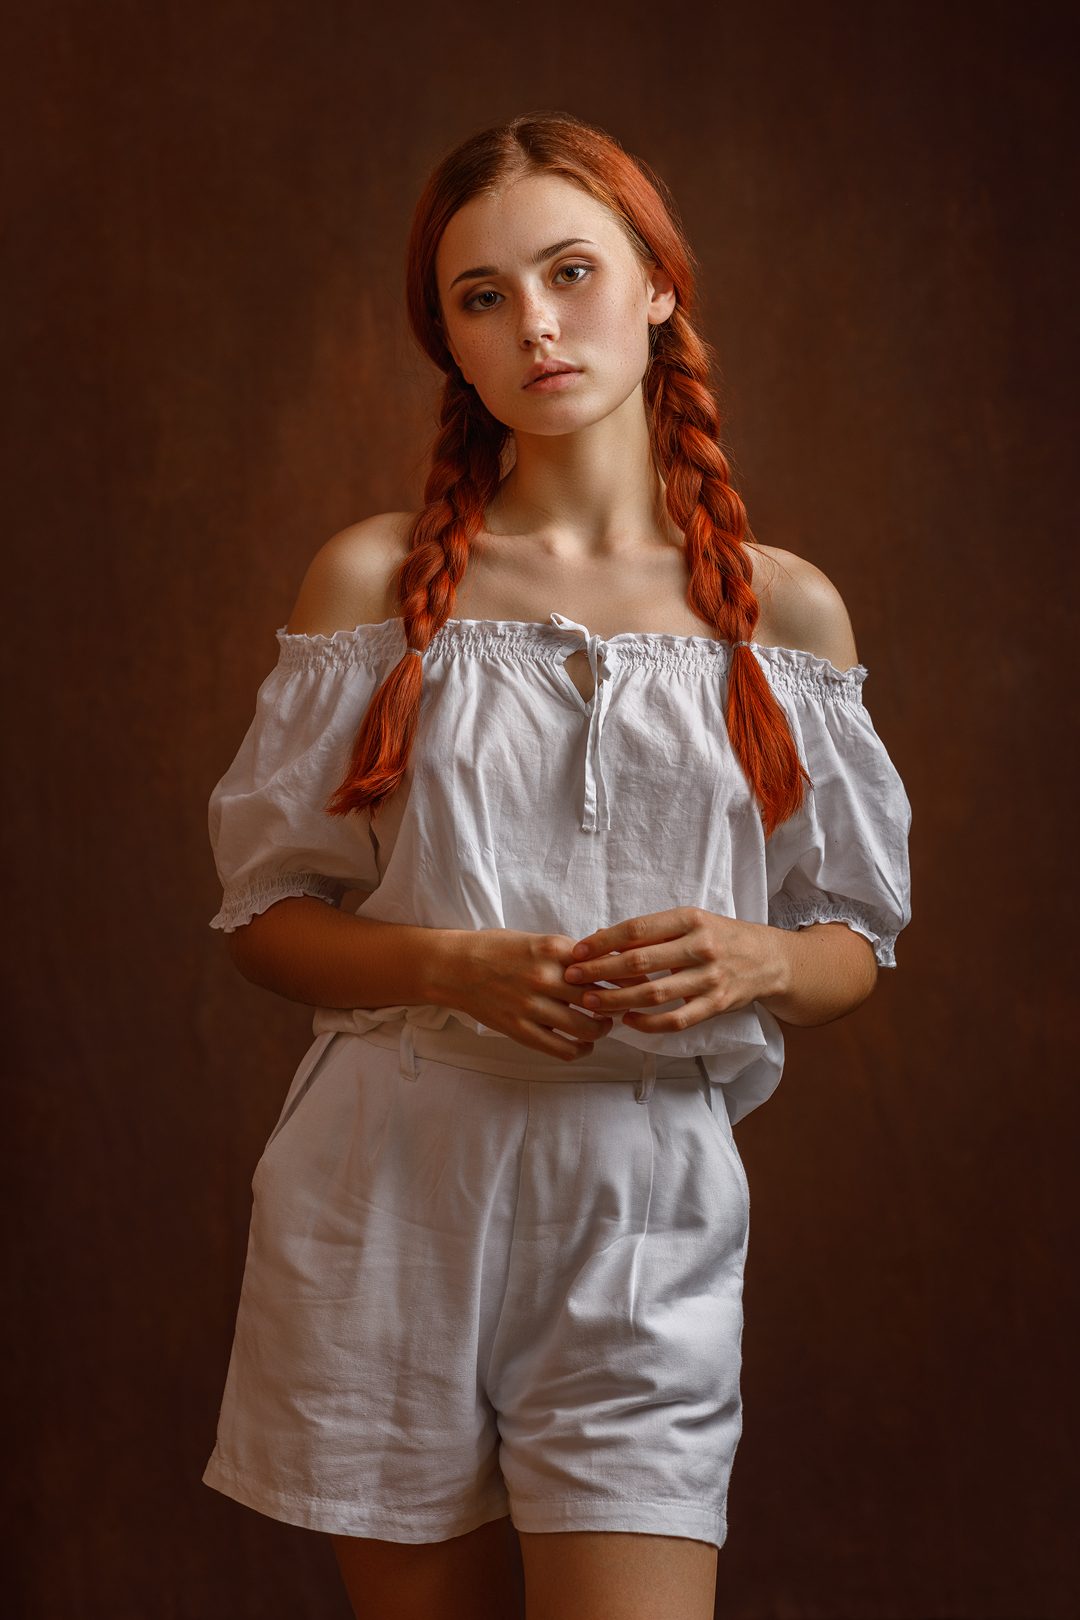 People 1080x1620 Sergey Sergeev women Nadezhda Tretyakova braids white clothing simple background freckles twintails redhead portrait display